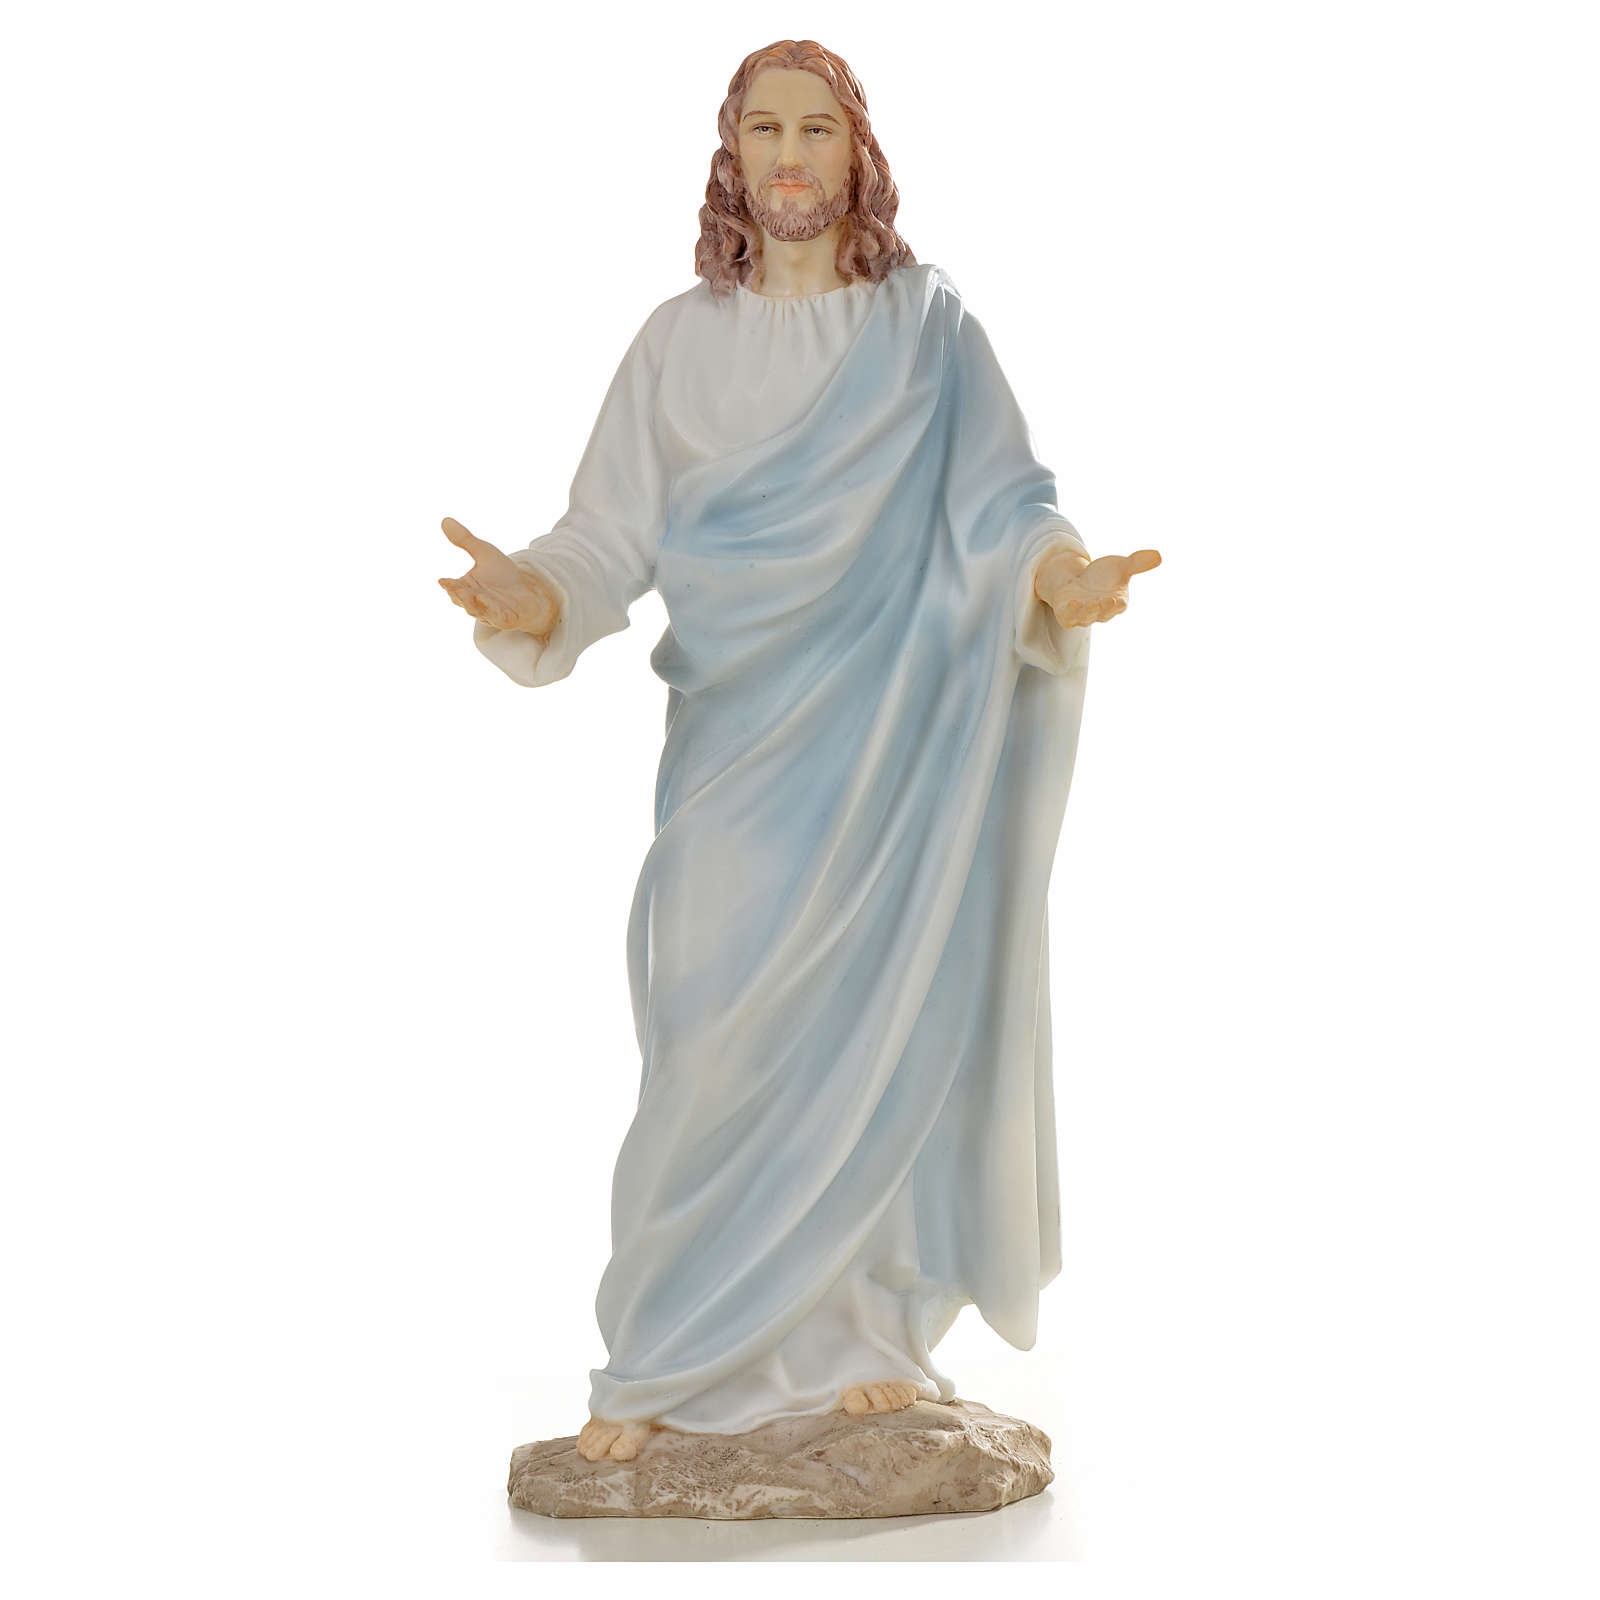 Jesus statue in resin, 30cm | online sales on HOLYART.com